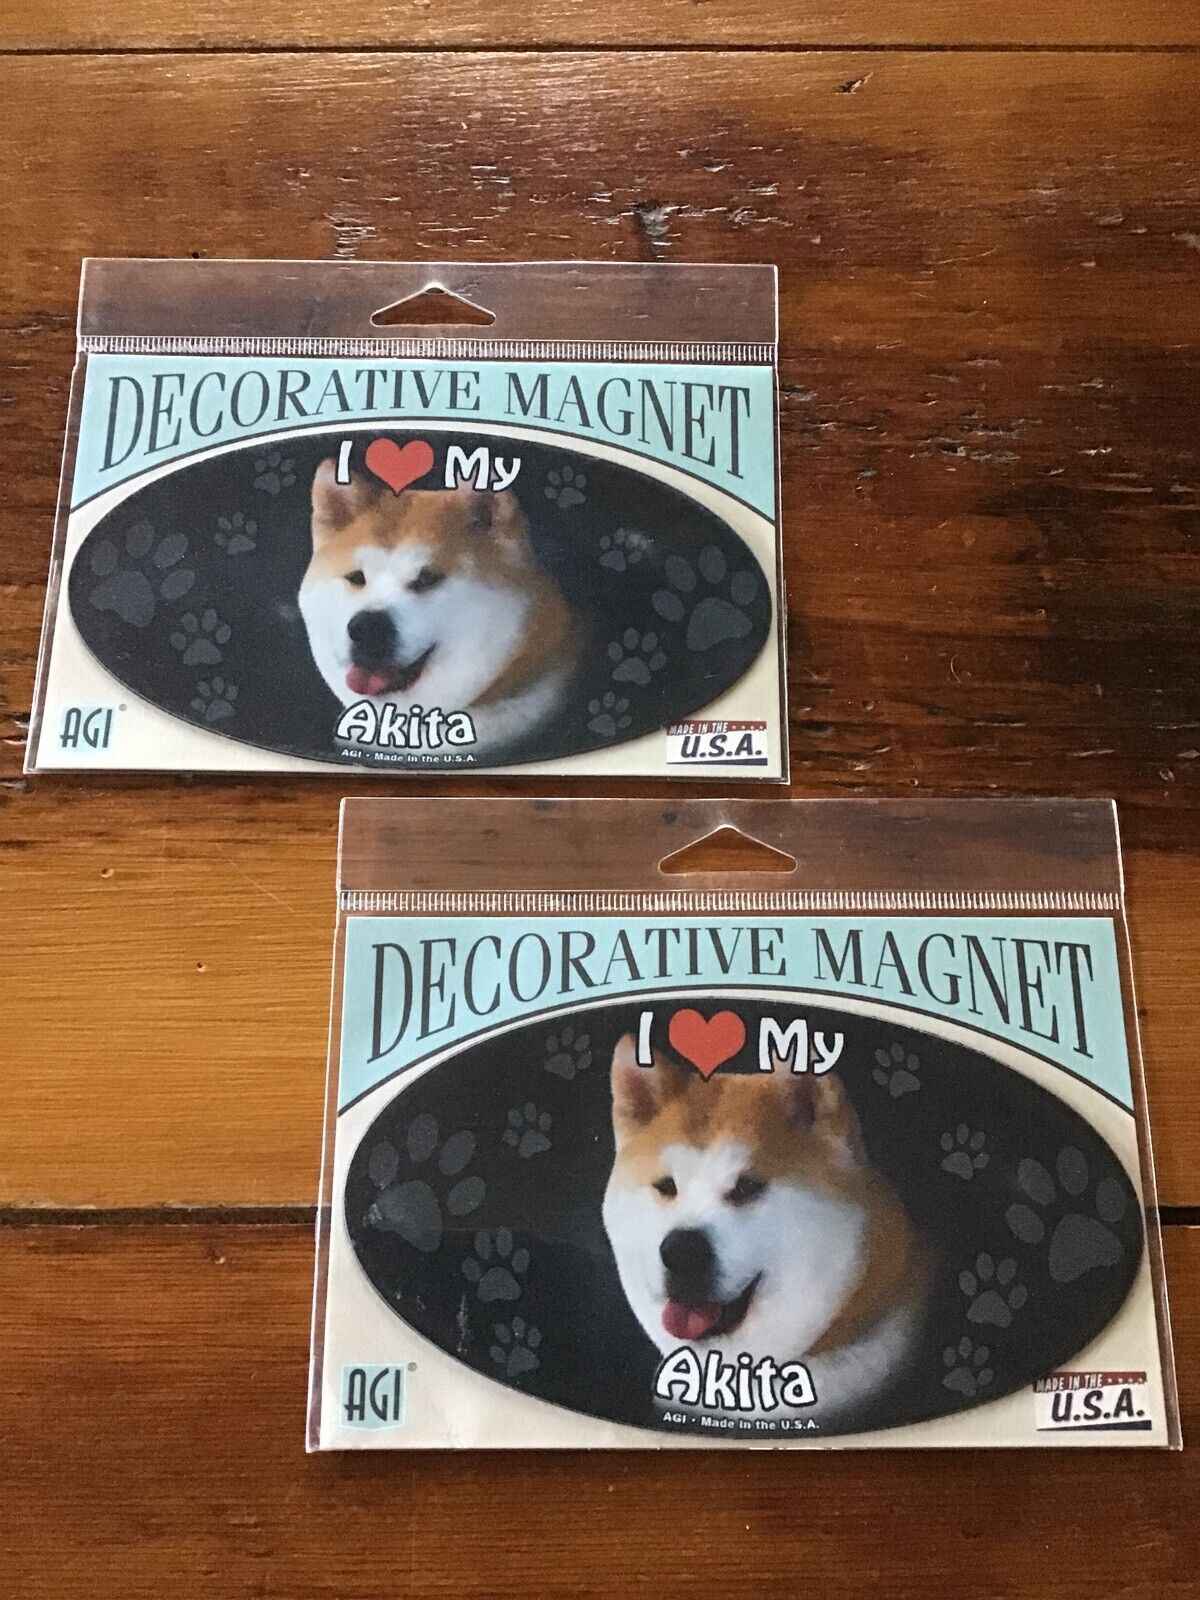 AGI Decorative Magnet I Love My Akita Lot Of 2 New